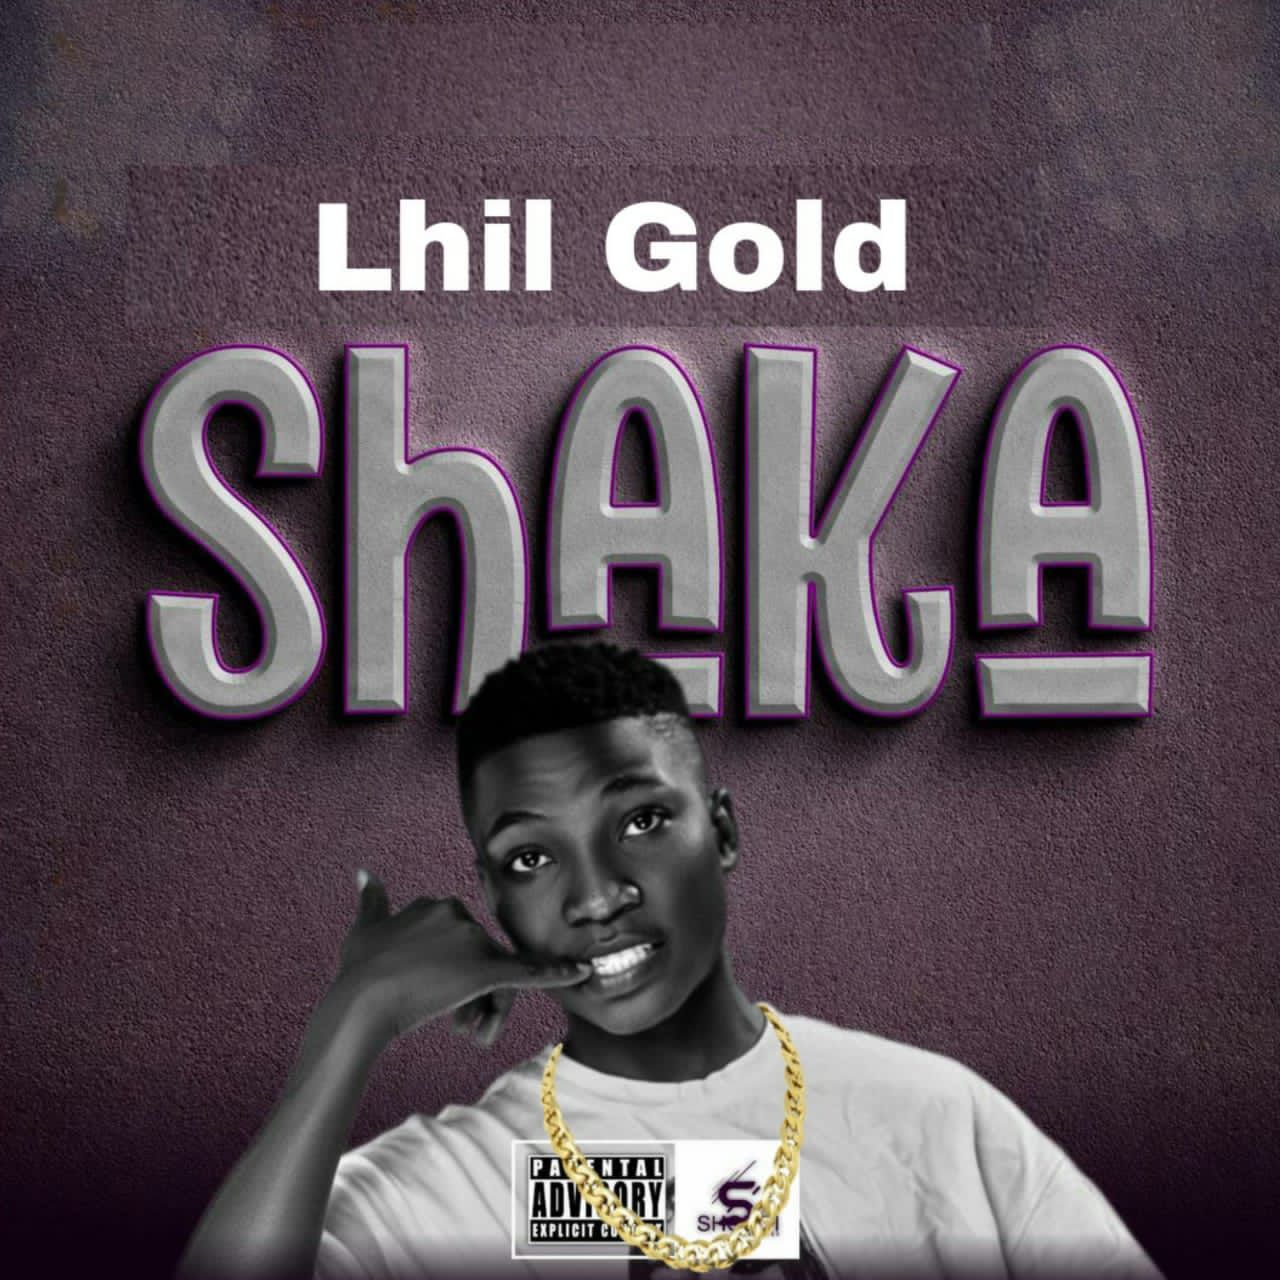 Lhil Gold Shaka